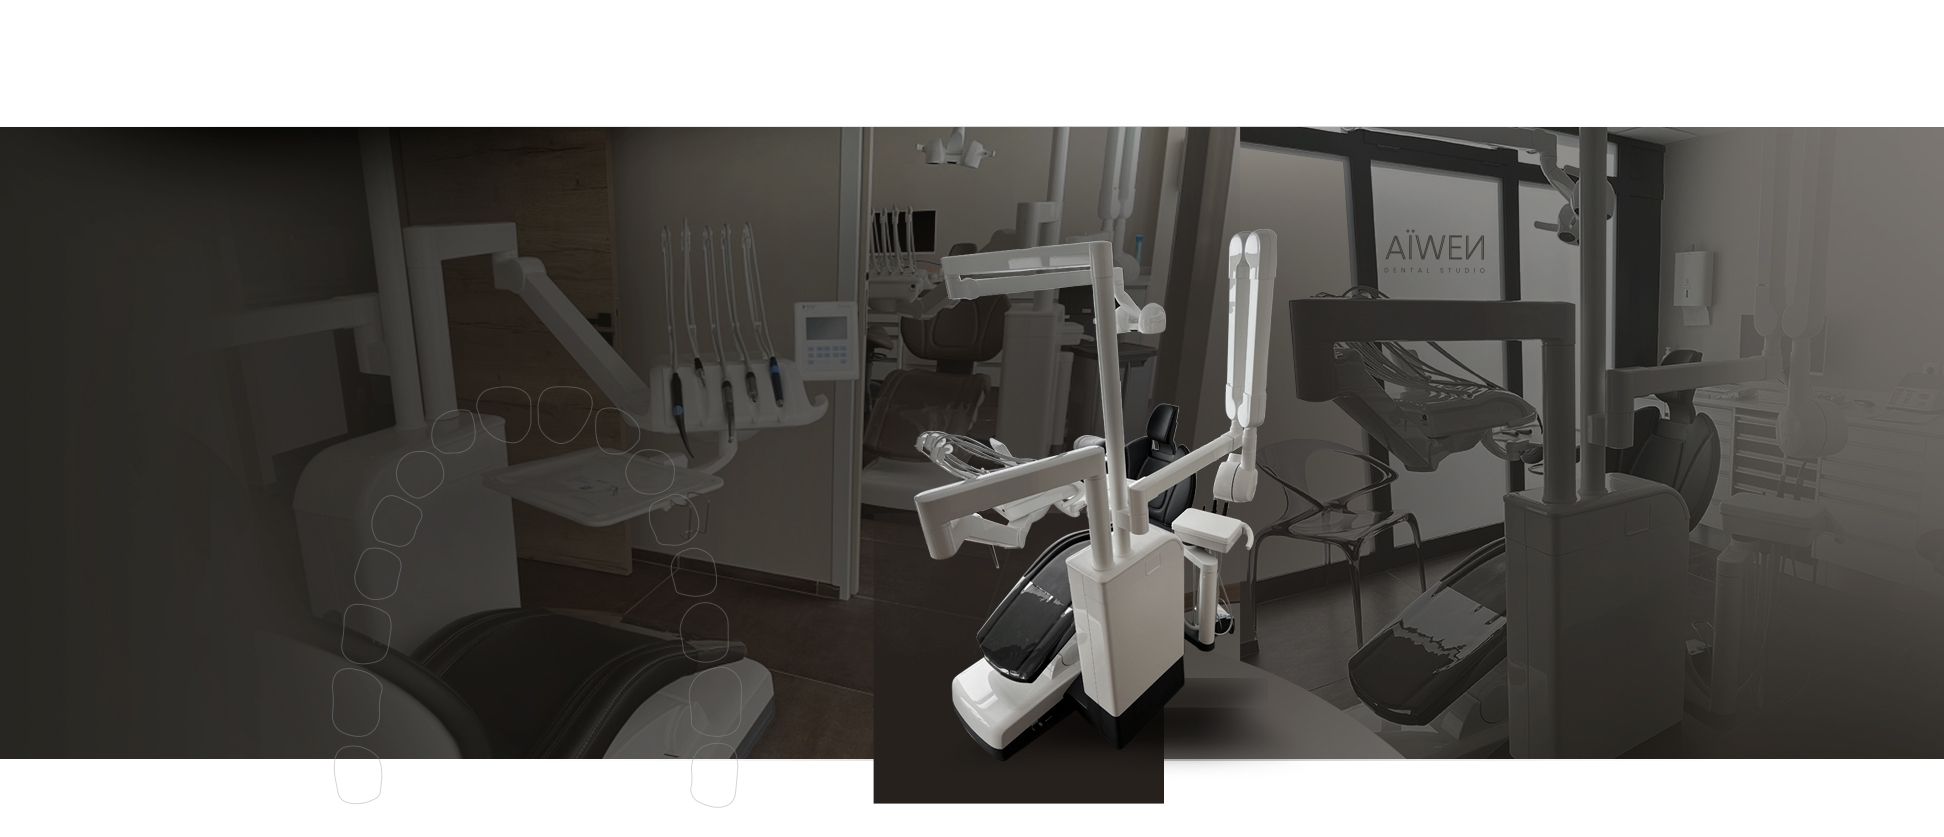 Aiwen Dental Studio